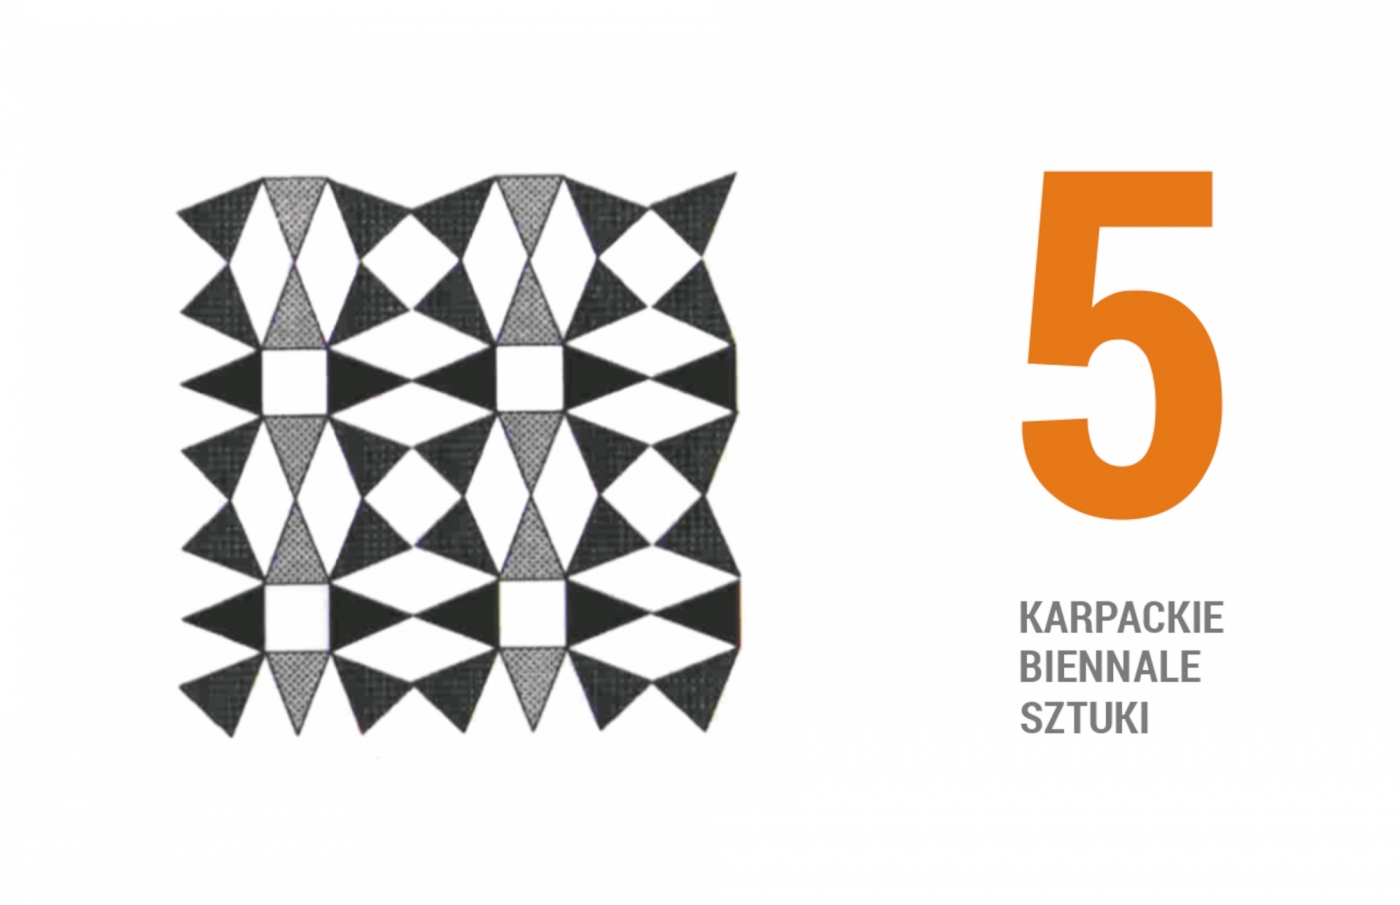 rckp-karpackie-biennale-sztuki-2020-zajawka